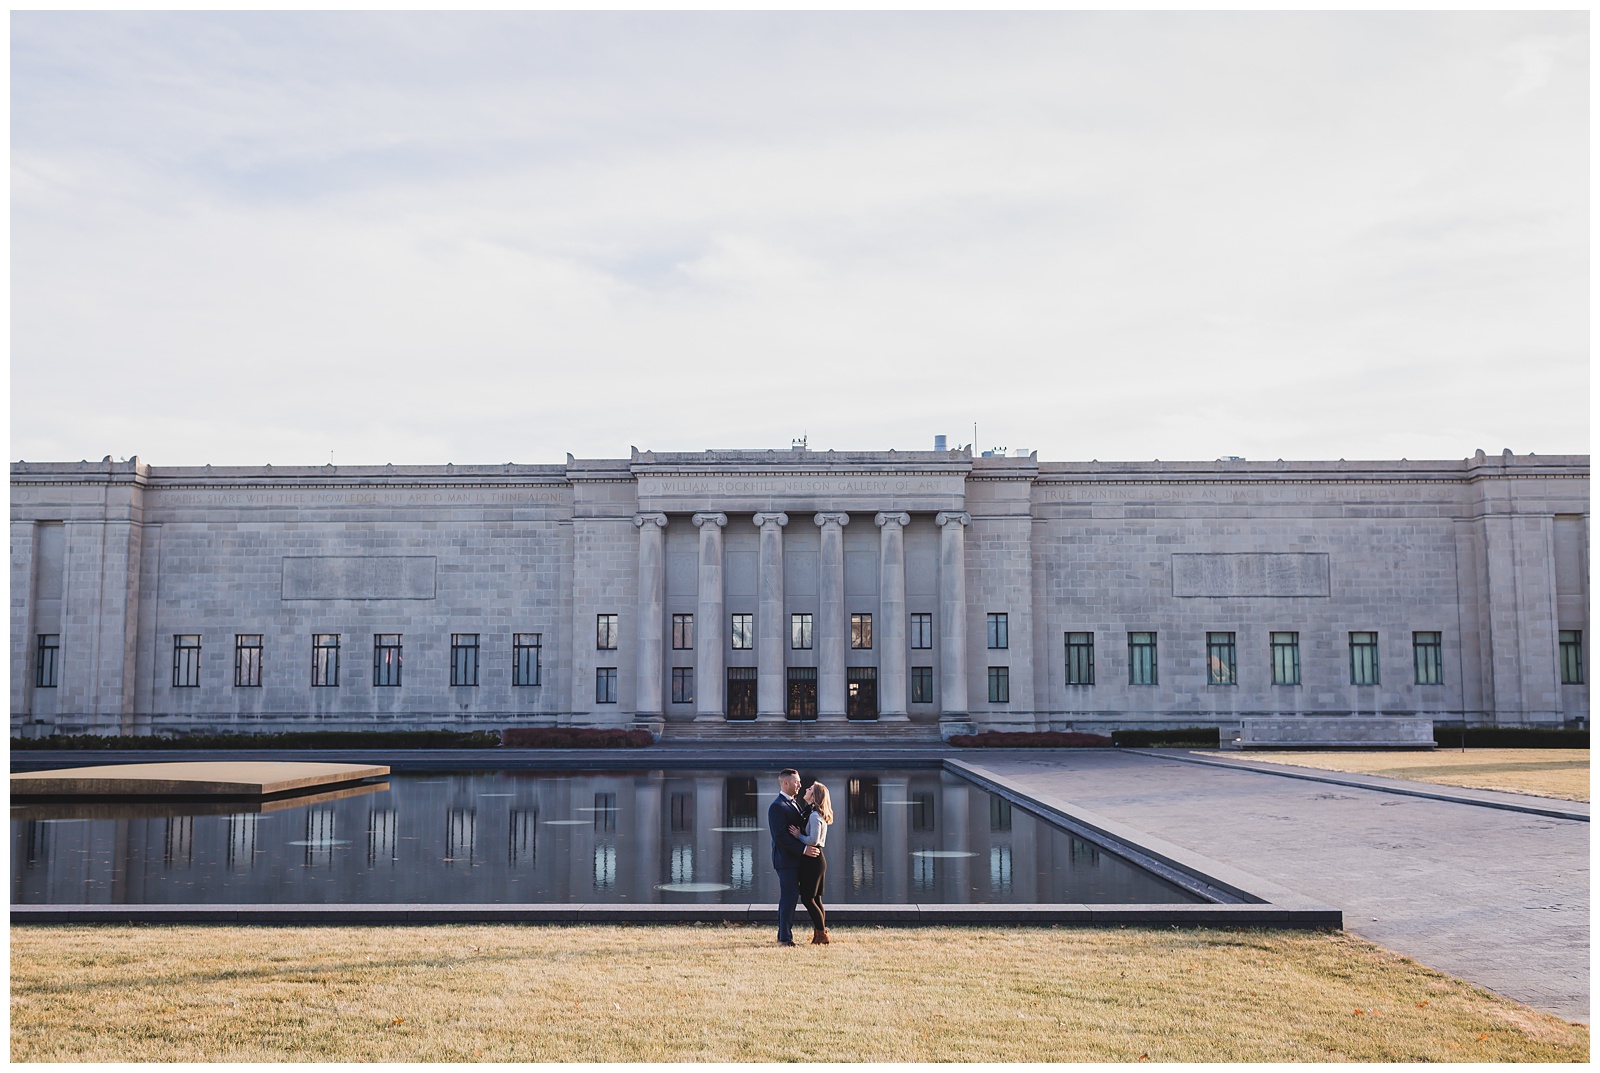 Engagement photography at the Nelson-Atkins Museum of Art by Kansas City wedding photographers Wisdom-Watson Weddings.